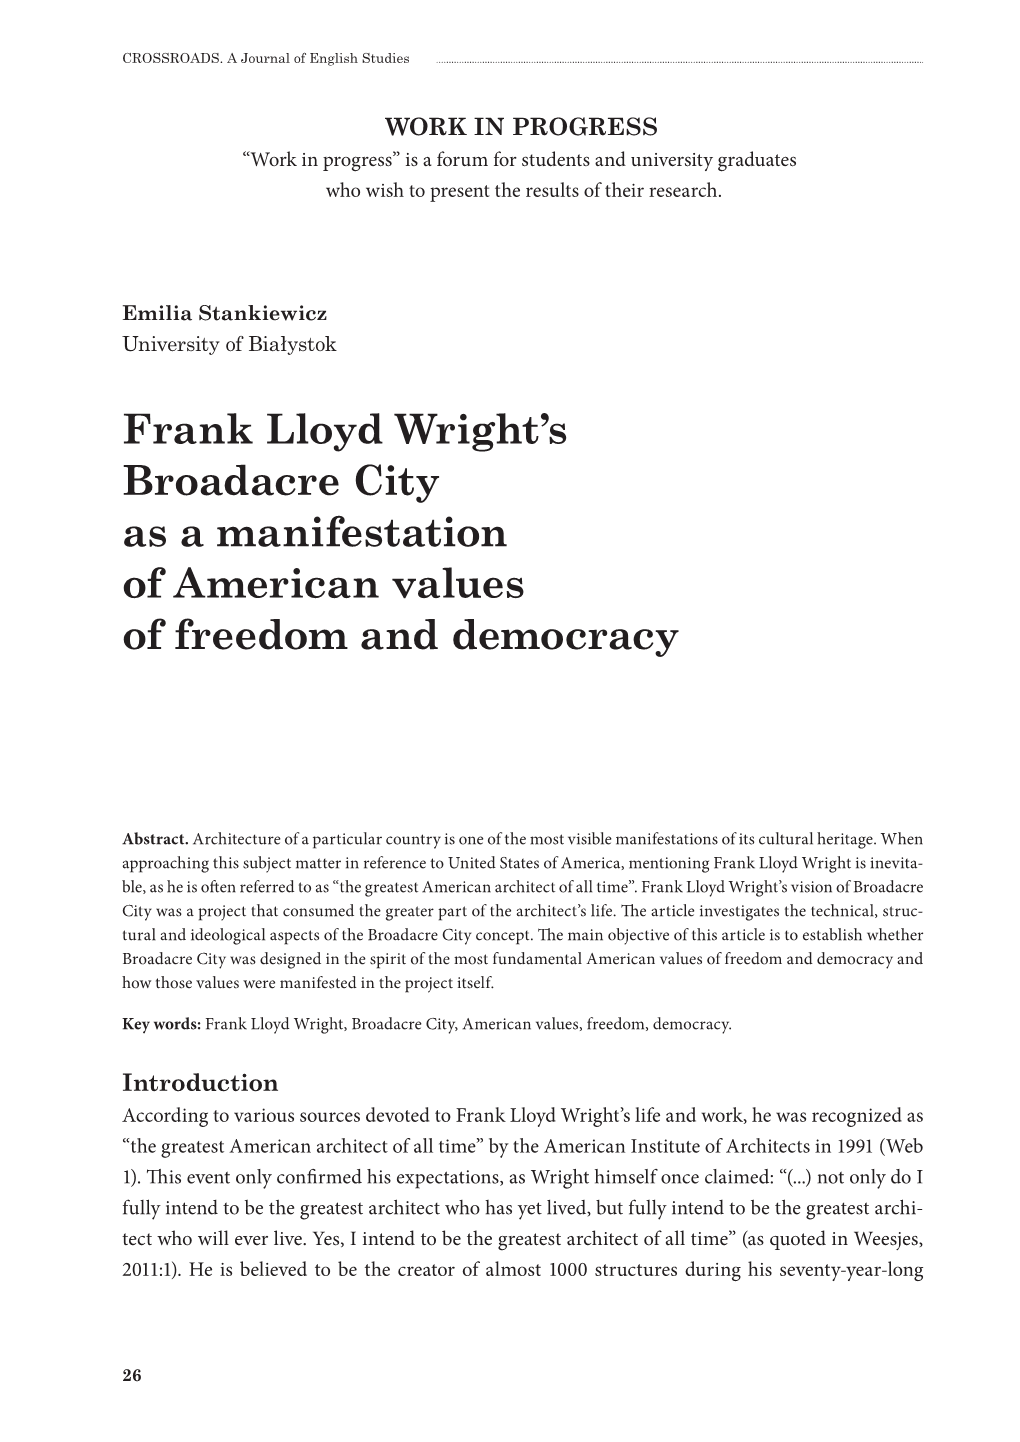 Frank Lloyd Wright's Broadacre City As a Manifestation of American